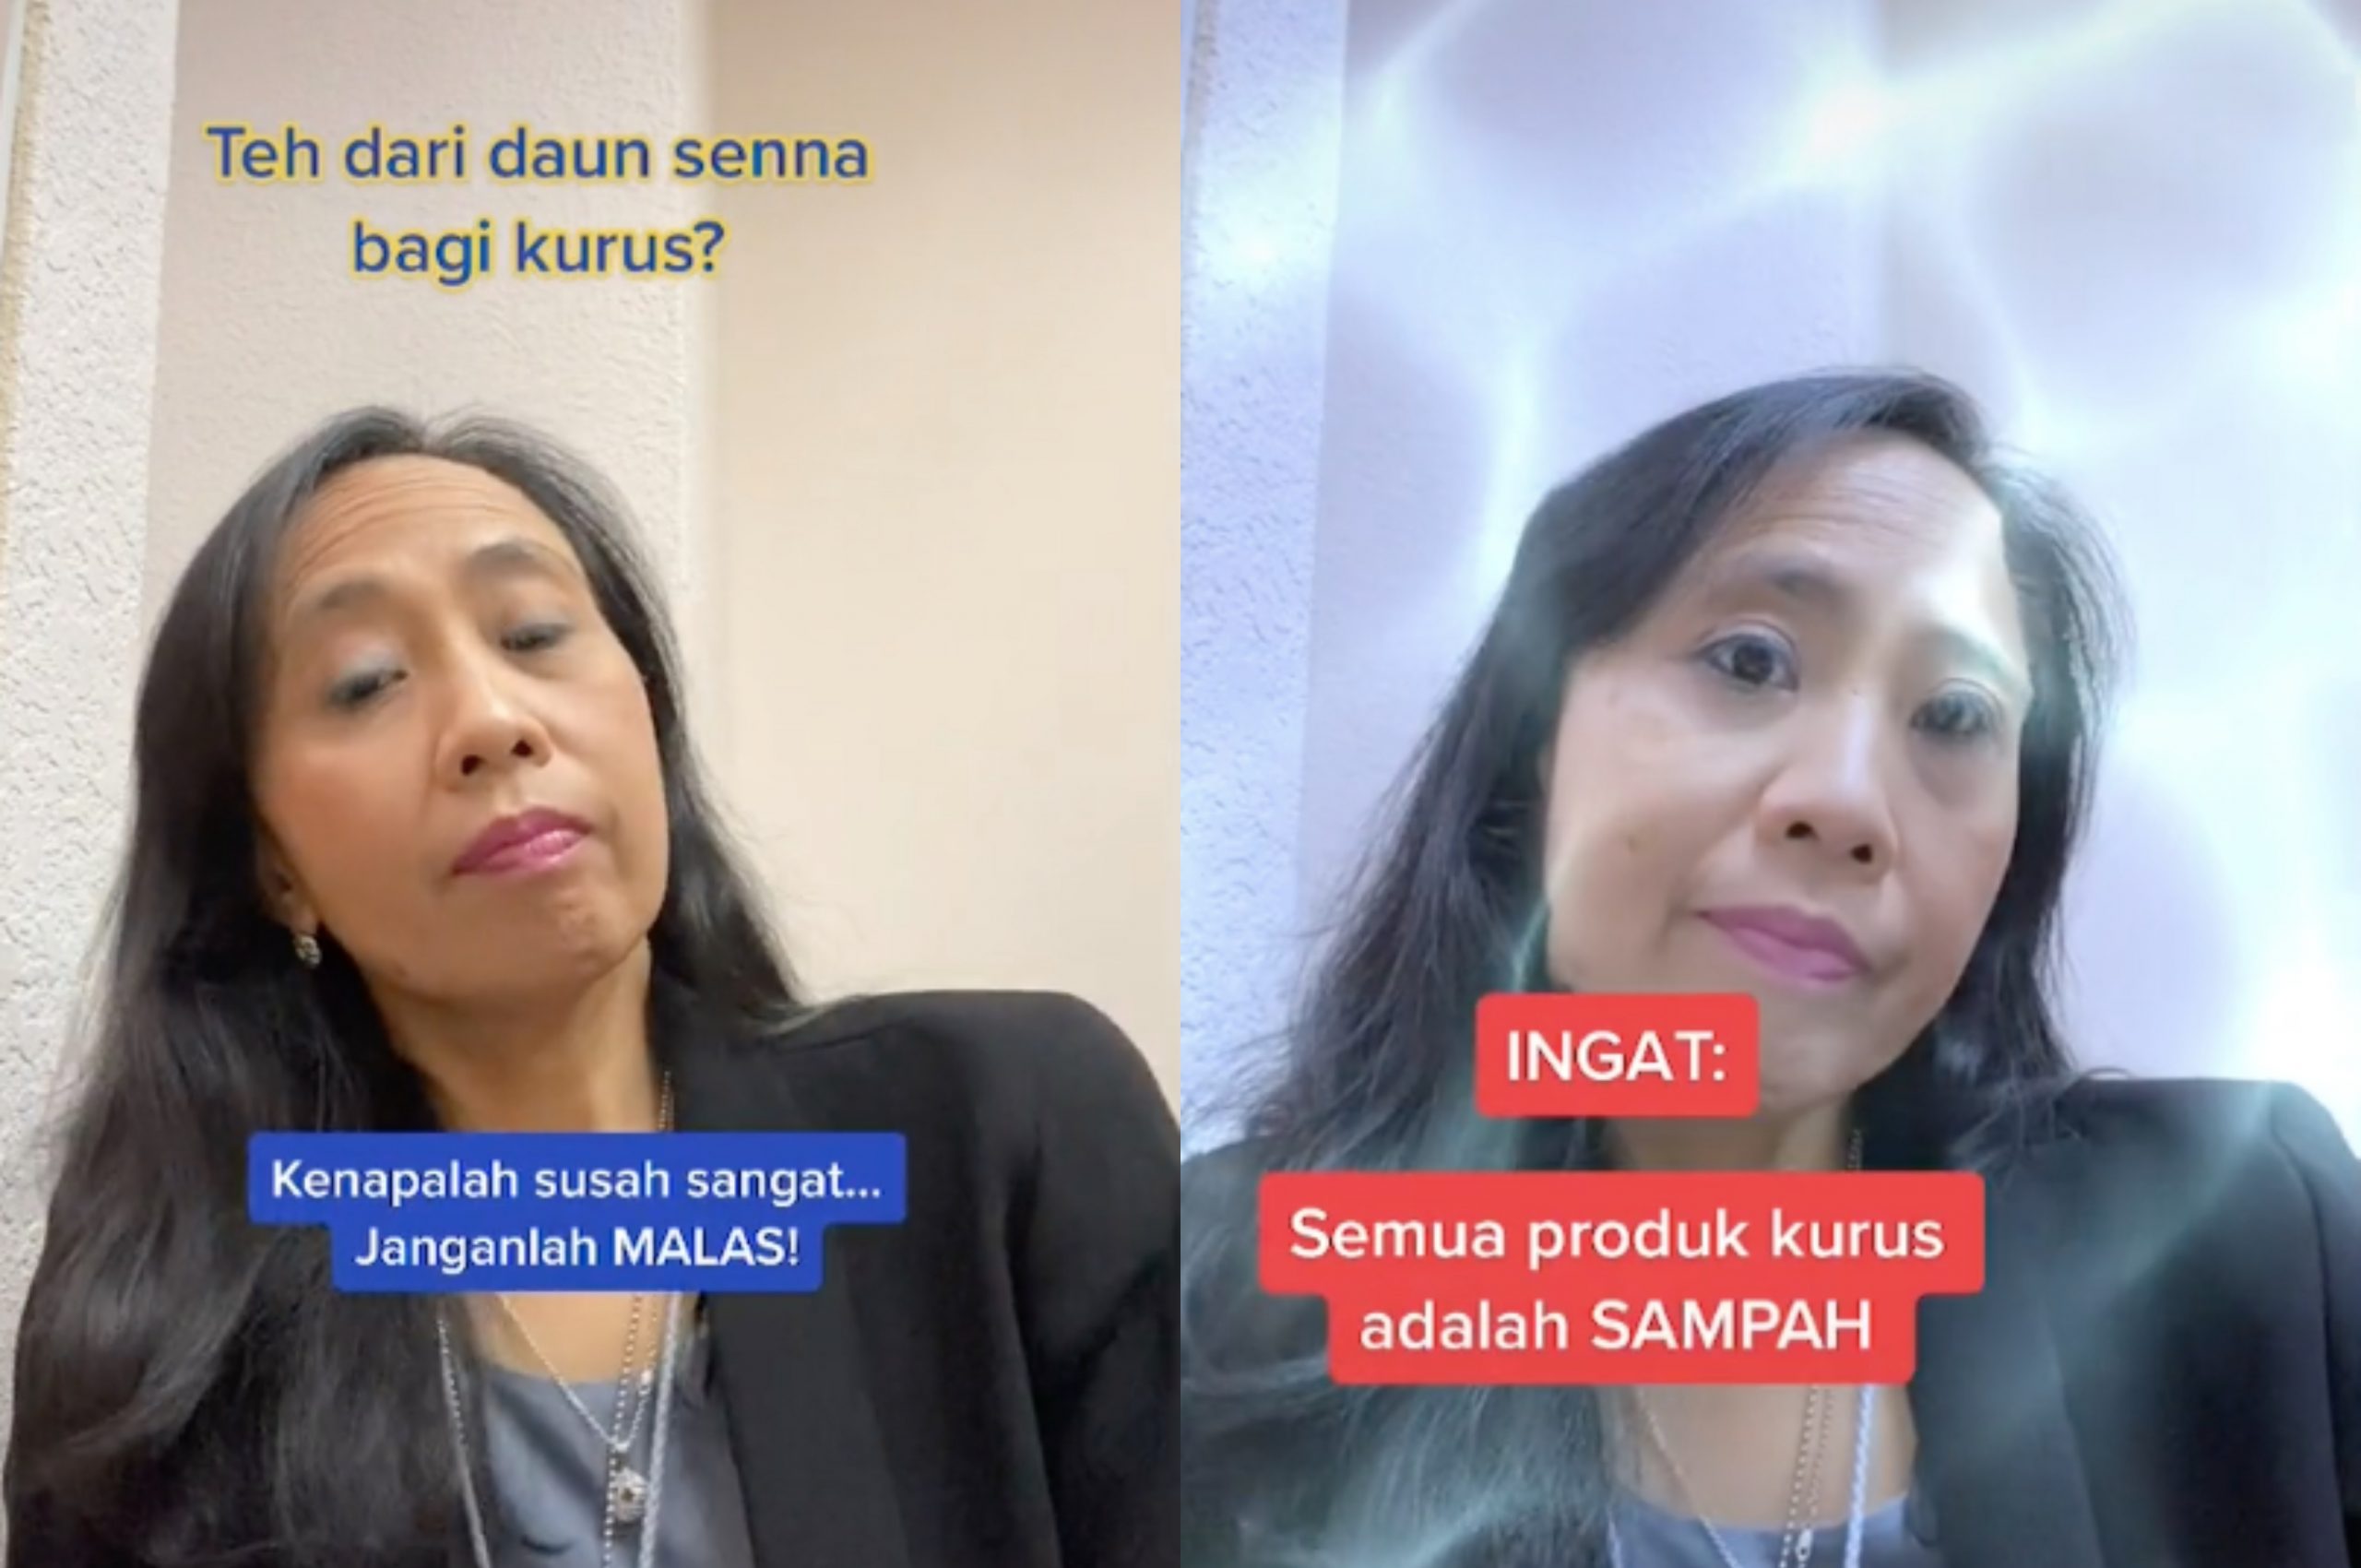 Buat Video Keburukan Produk Kurus, Kazim Elias Tegur Dr Rafidah – 'Tolong Berhati-Hati Dalam Menulis & Content'